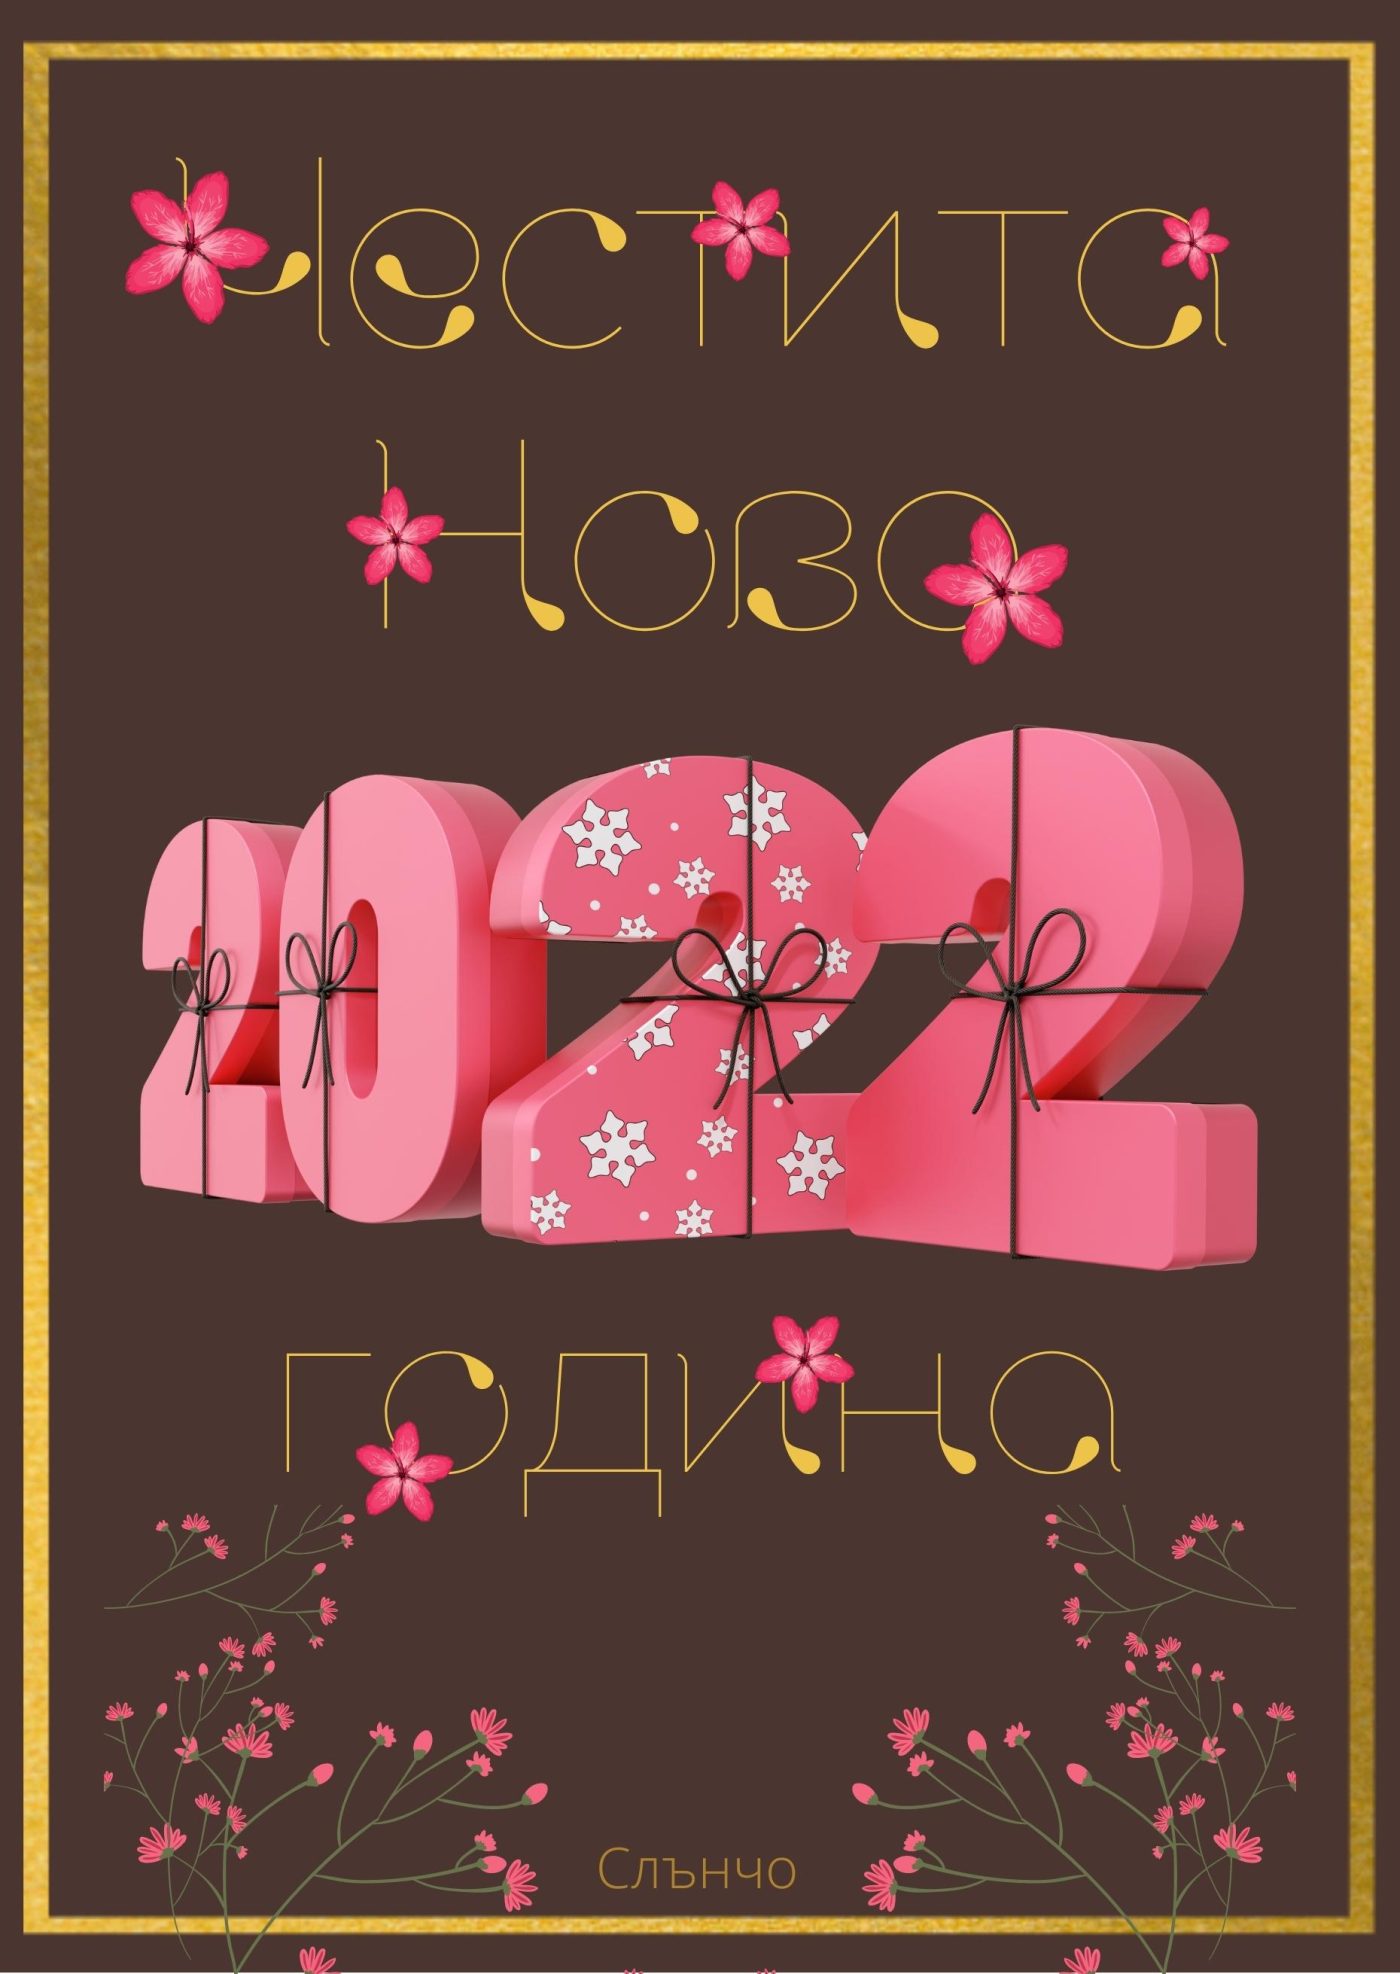 Честита Нова 2022 година - новогодишни картички, щастлива нова година, картички за нова година, 2022, слънчо обичкам те, пожелания за нова година